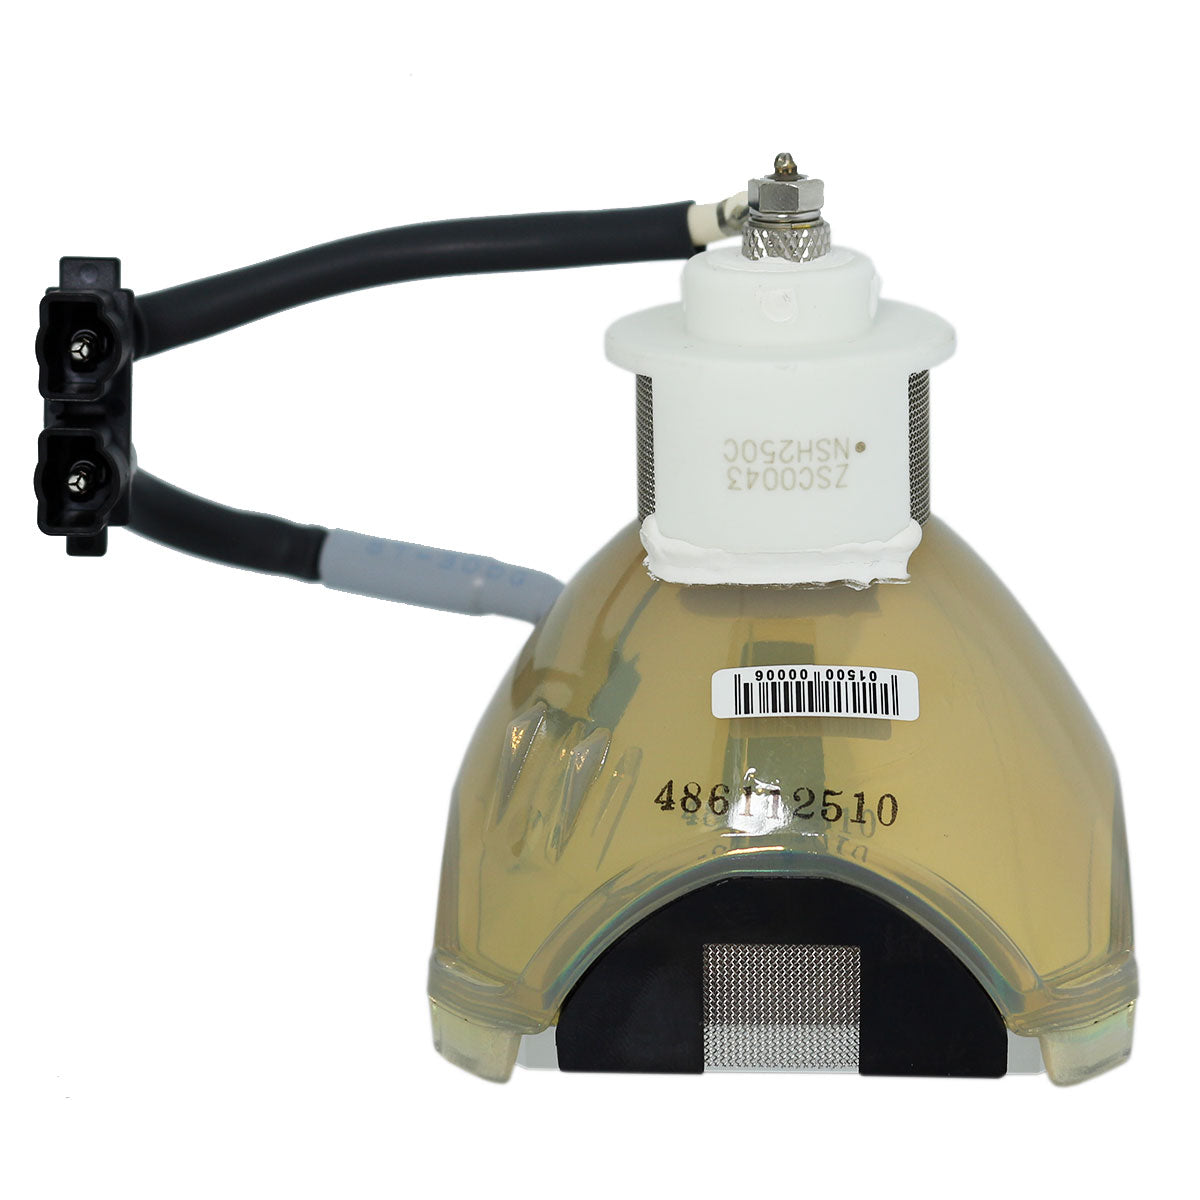 Hitachi DT00471 Ushio Projector Bare Lamp